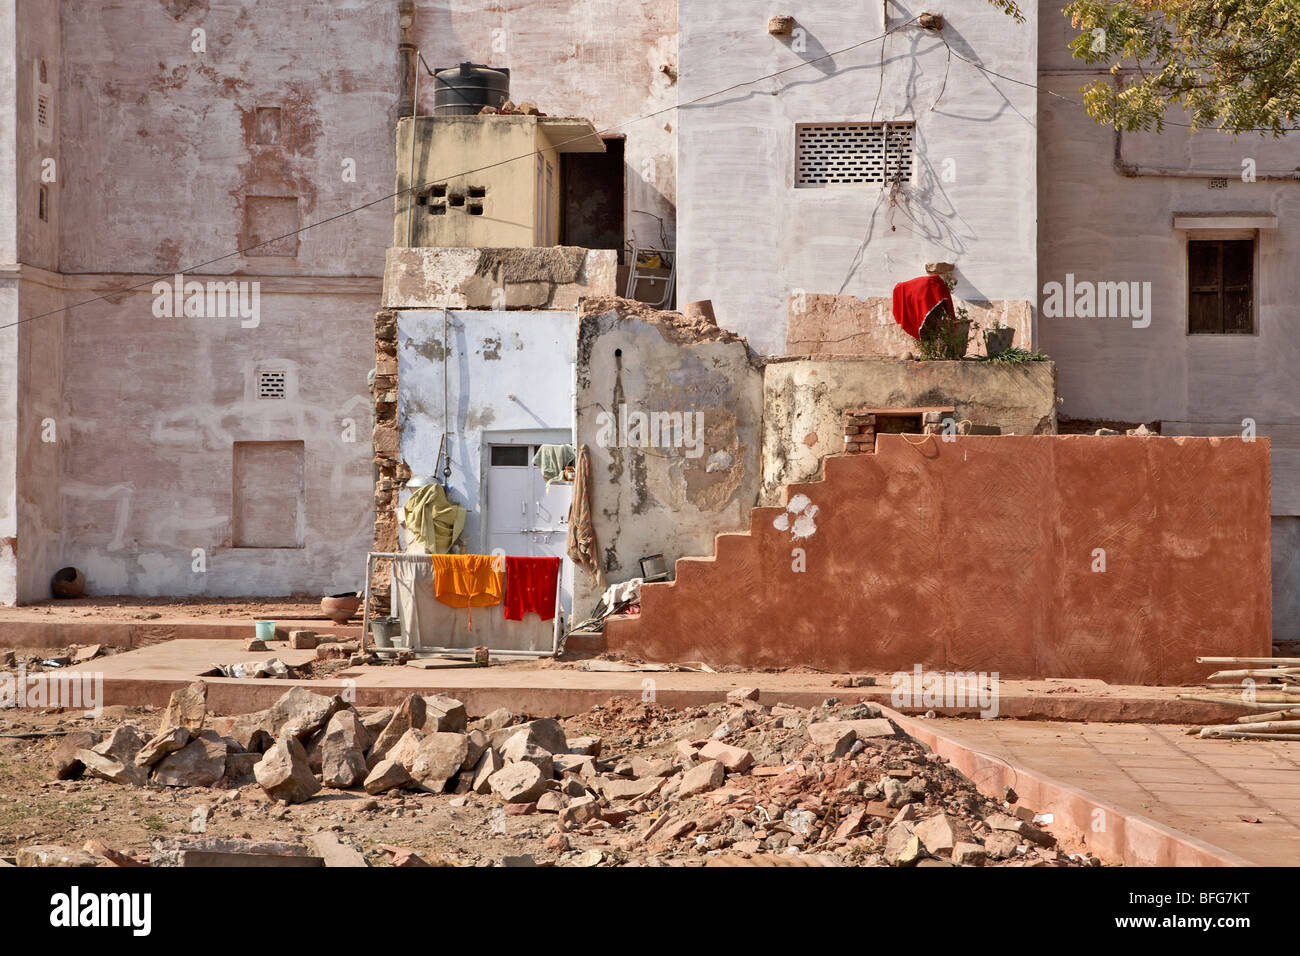 Tumbledown House Jaipur Rajasthan India Stock Photo